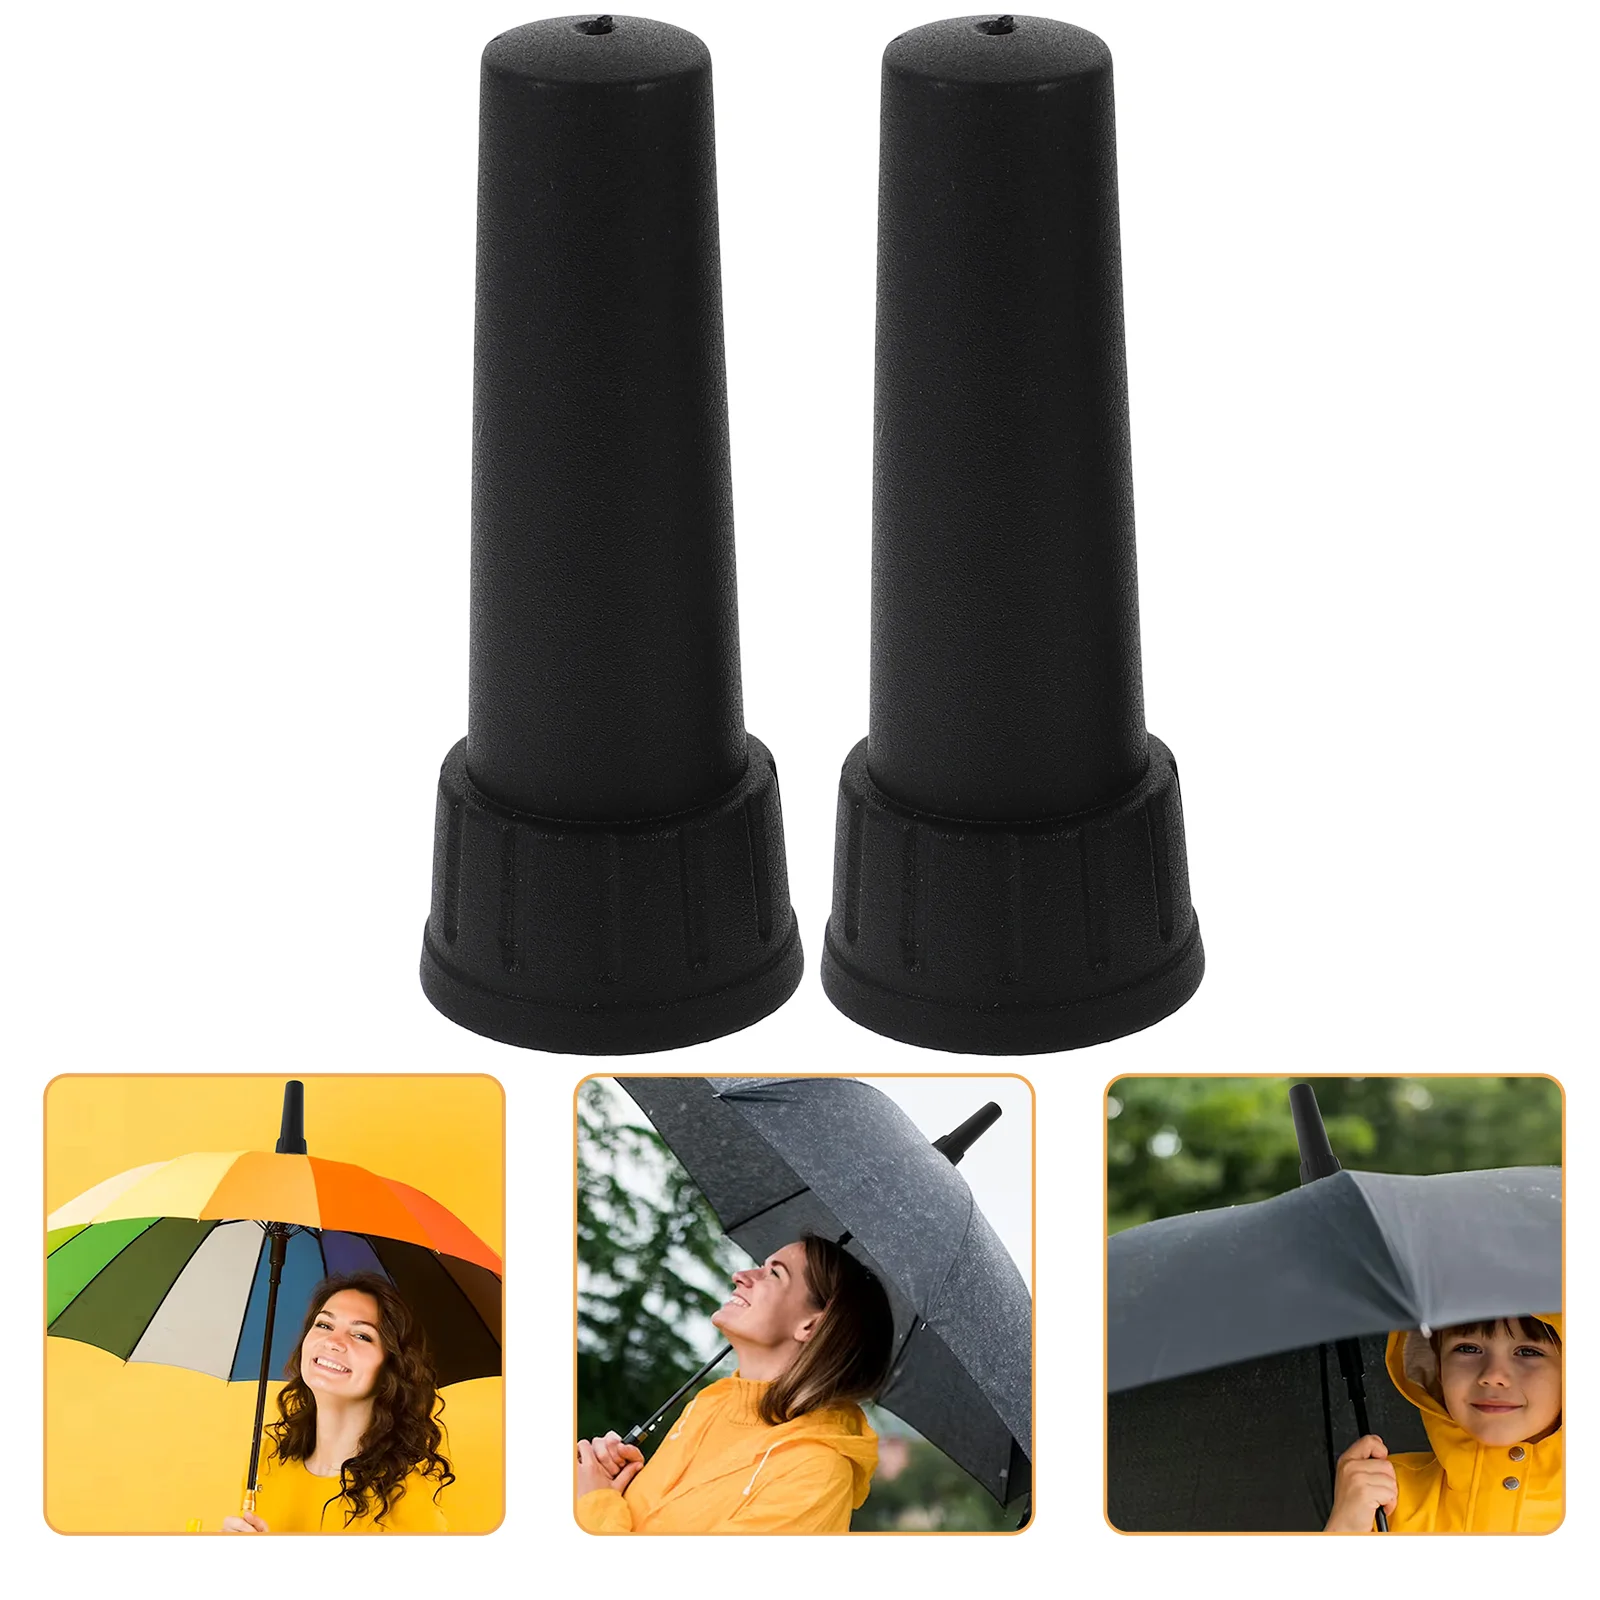 

2 Pcs Cane Umbrella Accessories Repair Major Tip Caps Tops Ends Rubber Replacement Portable Cover